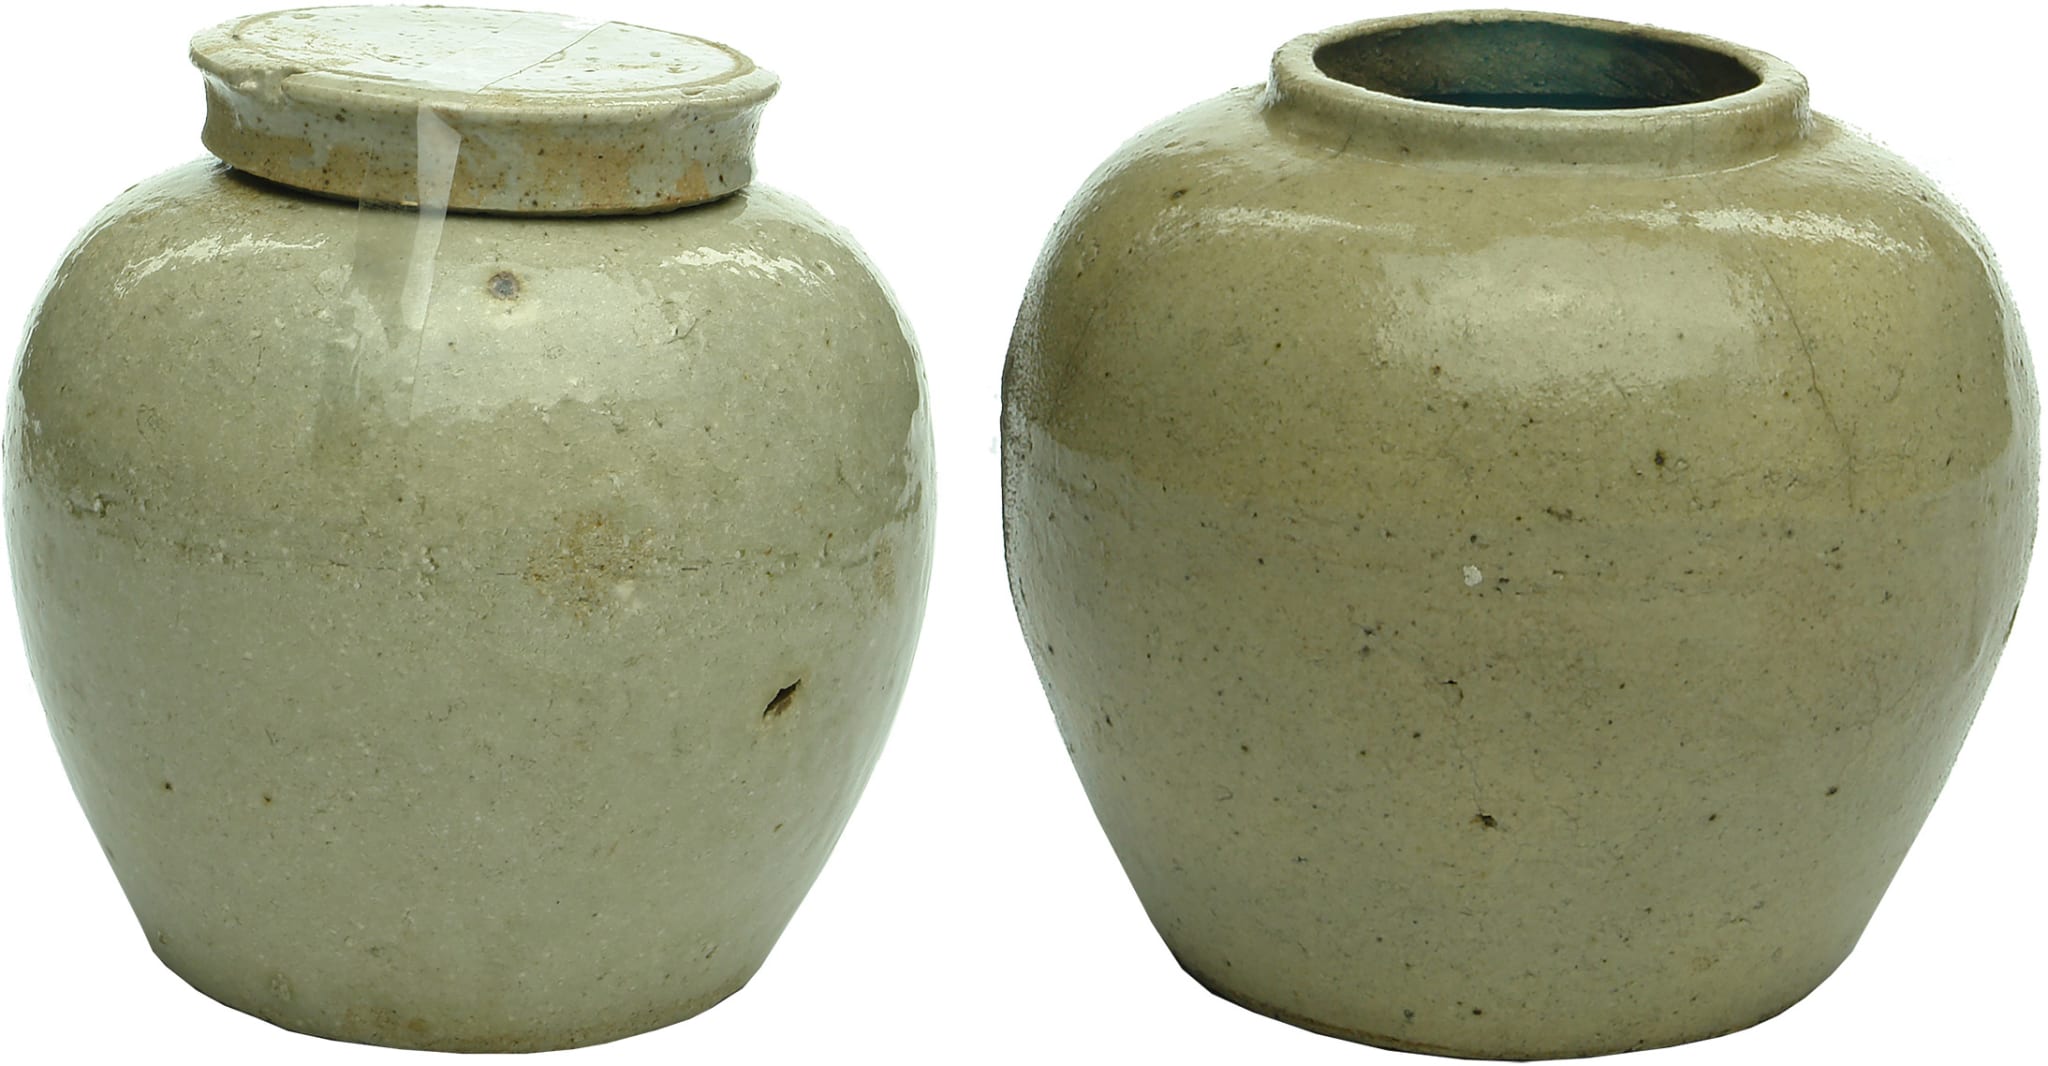 Ceramic Chinese Ginger Jars